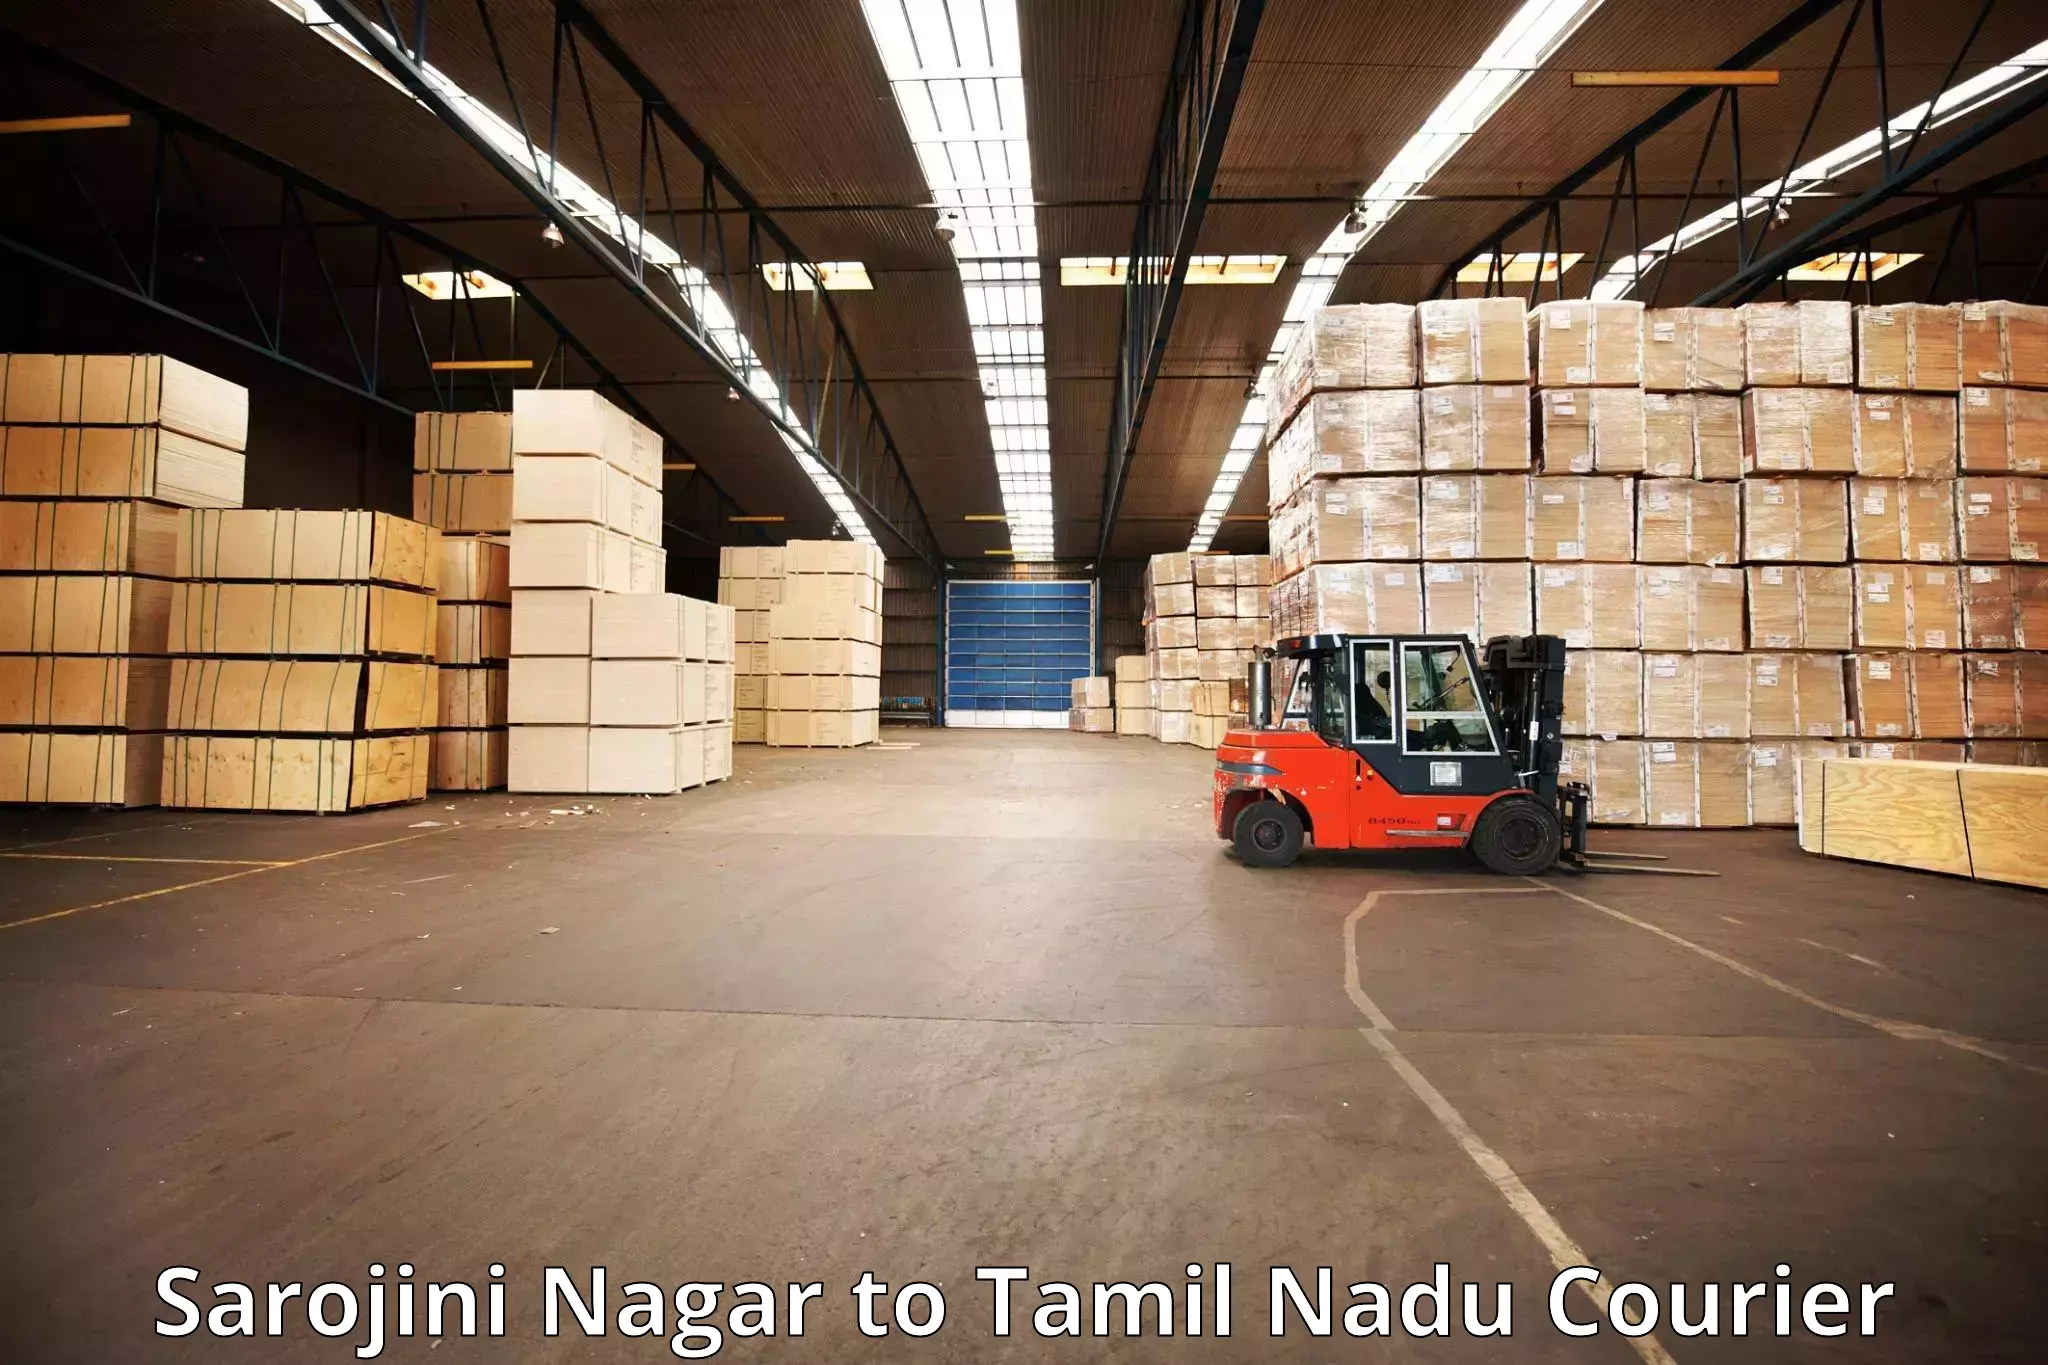 Luggage delivery app Sarojini Nagar to Chennai Port